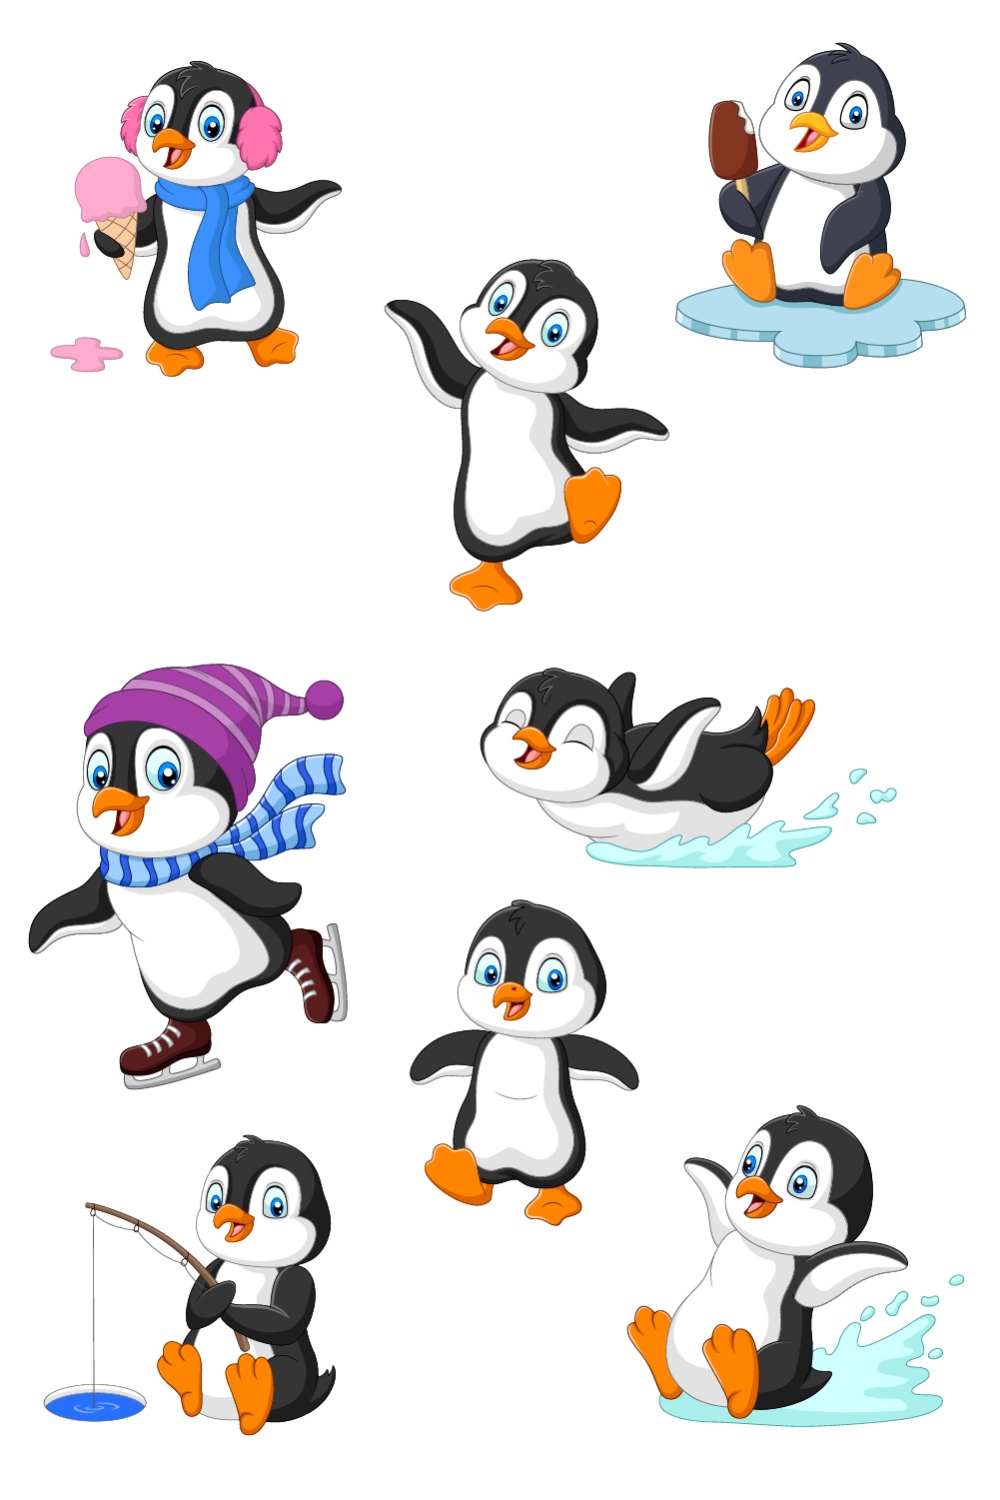 8 Cartoon Penguins Character pinterest preview image.